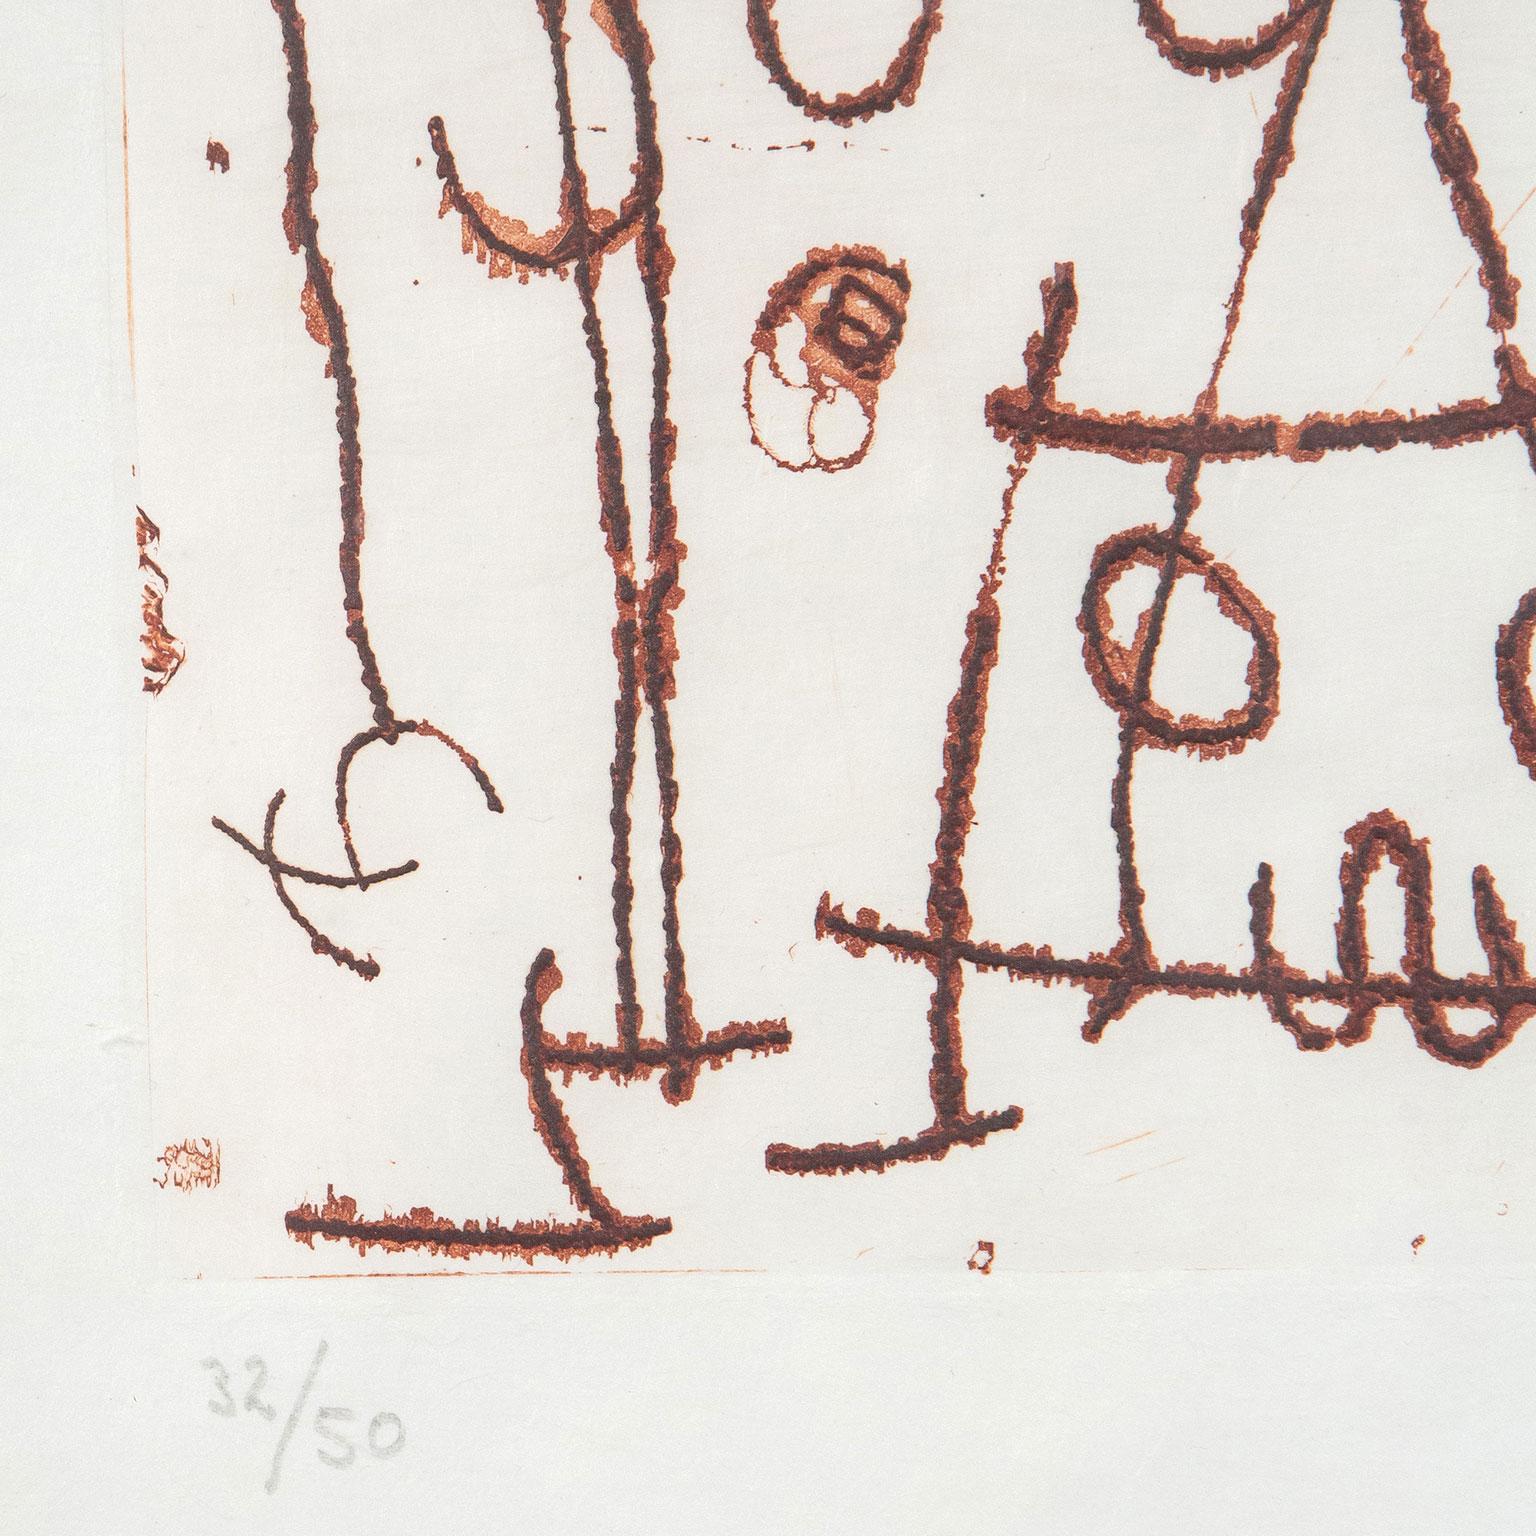 Paroles Peintes III - Gray Abstract Print by Joan Miró